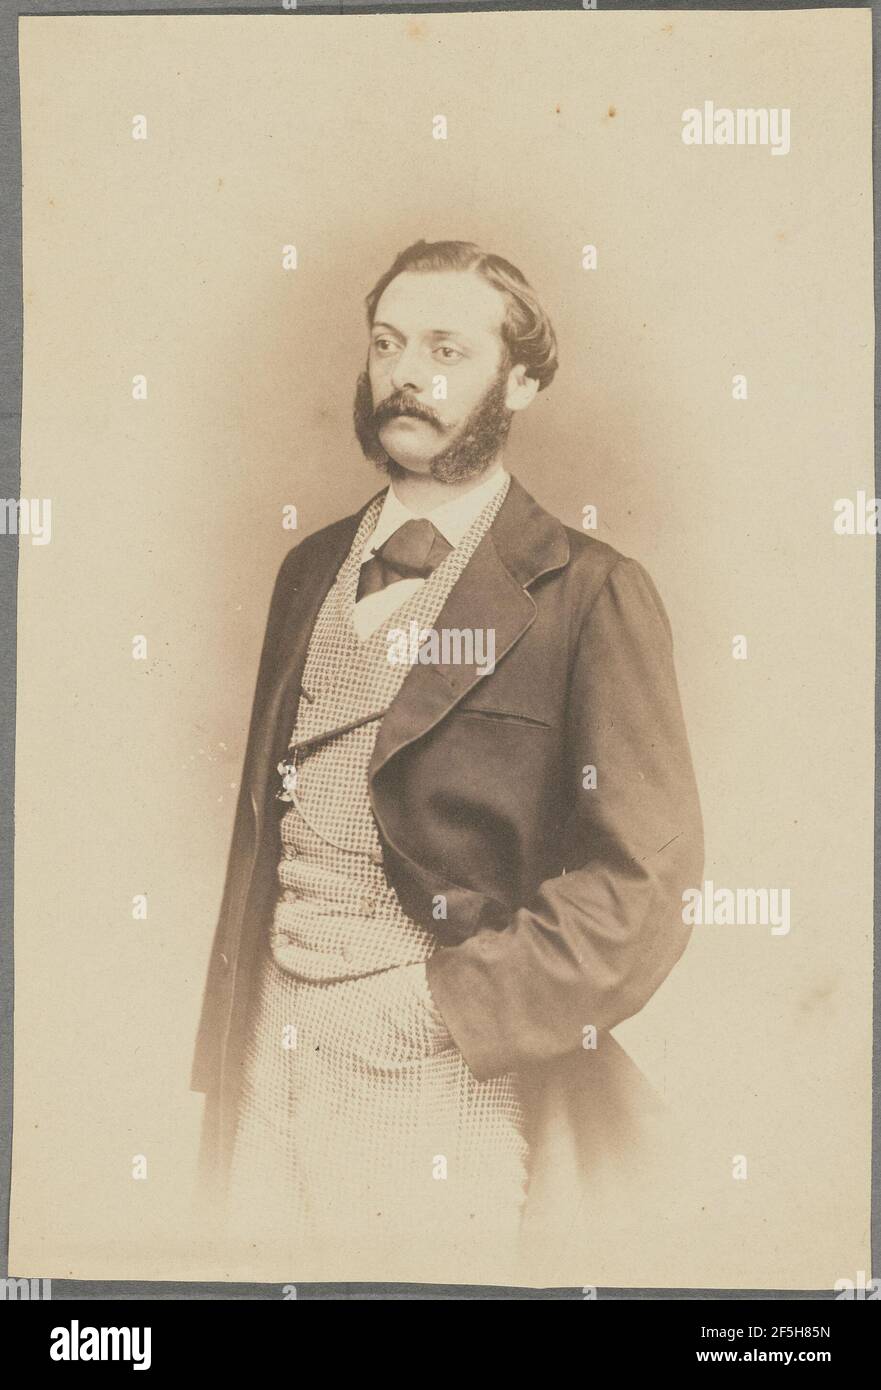 Tachard, Ambassade de France ce Bruxelles 1848. Nadar Gaspard Félix Tournachon (French, 1820 - 1910) Stock Photo